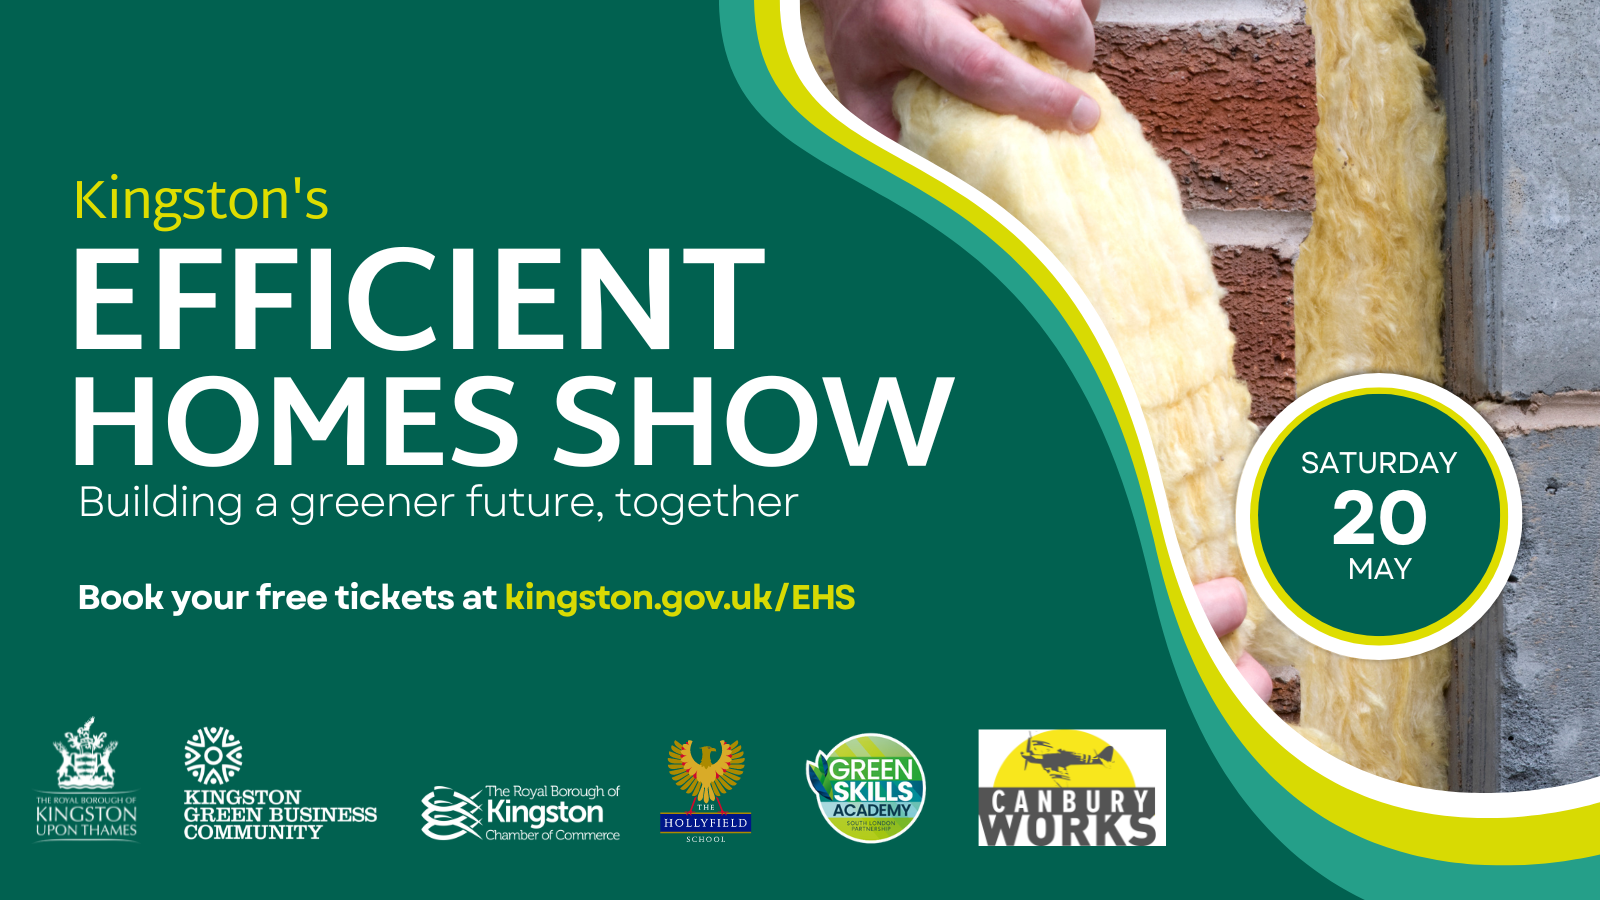 Kingston's Efficient Homes Show - Saturday 20 May